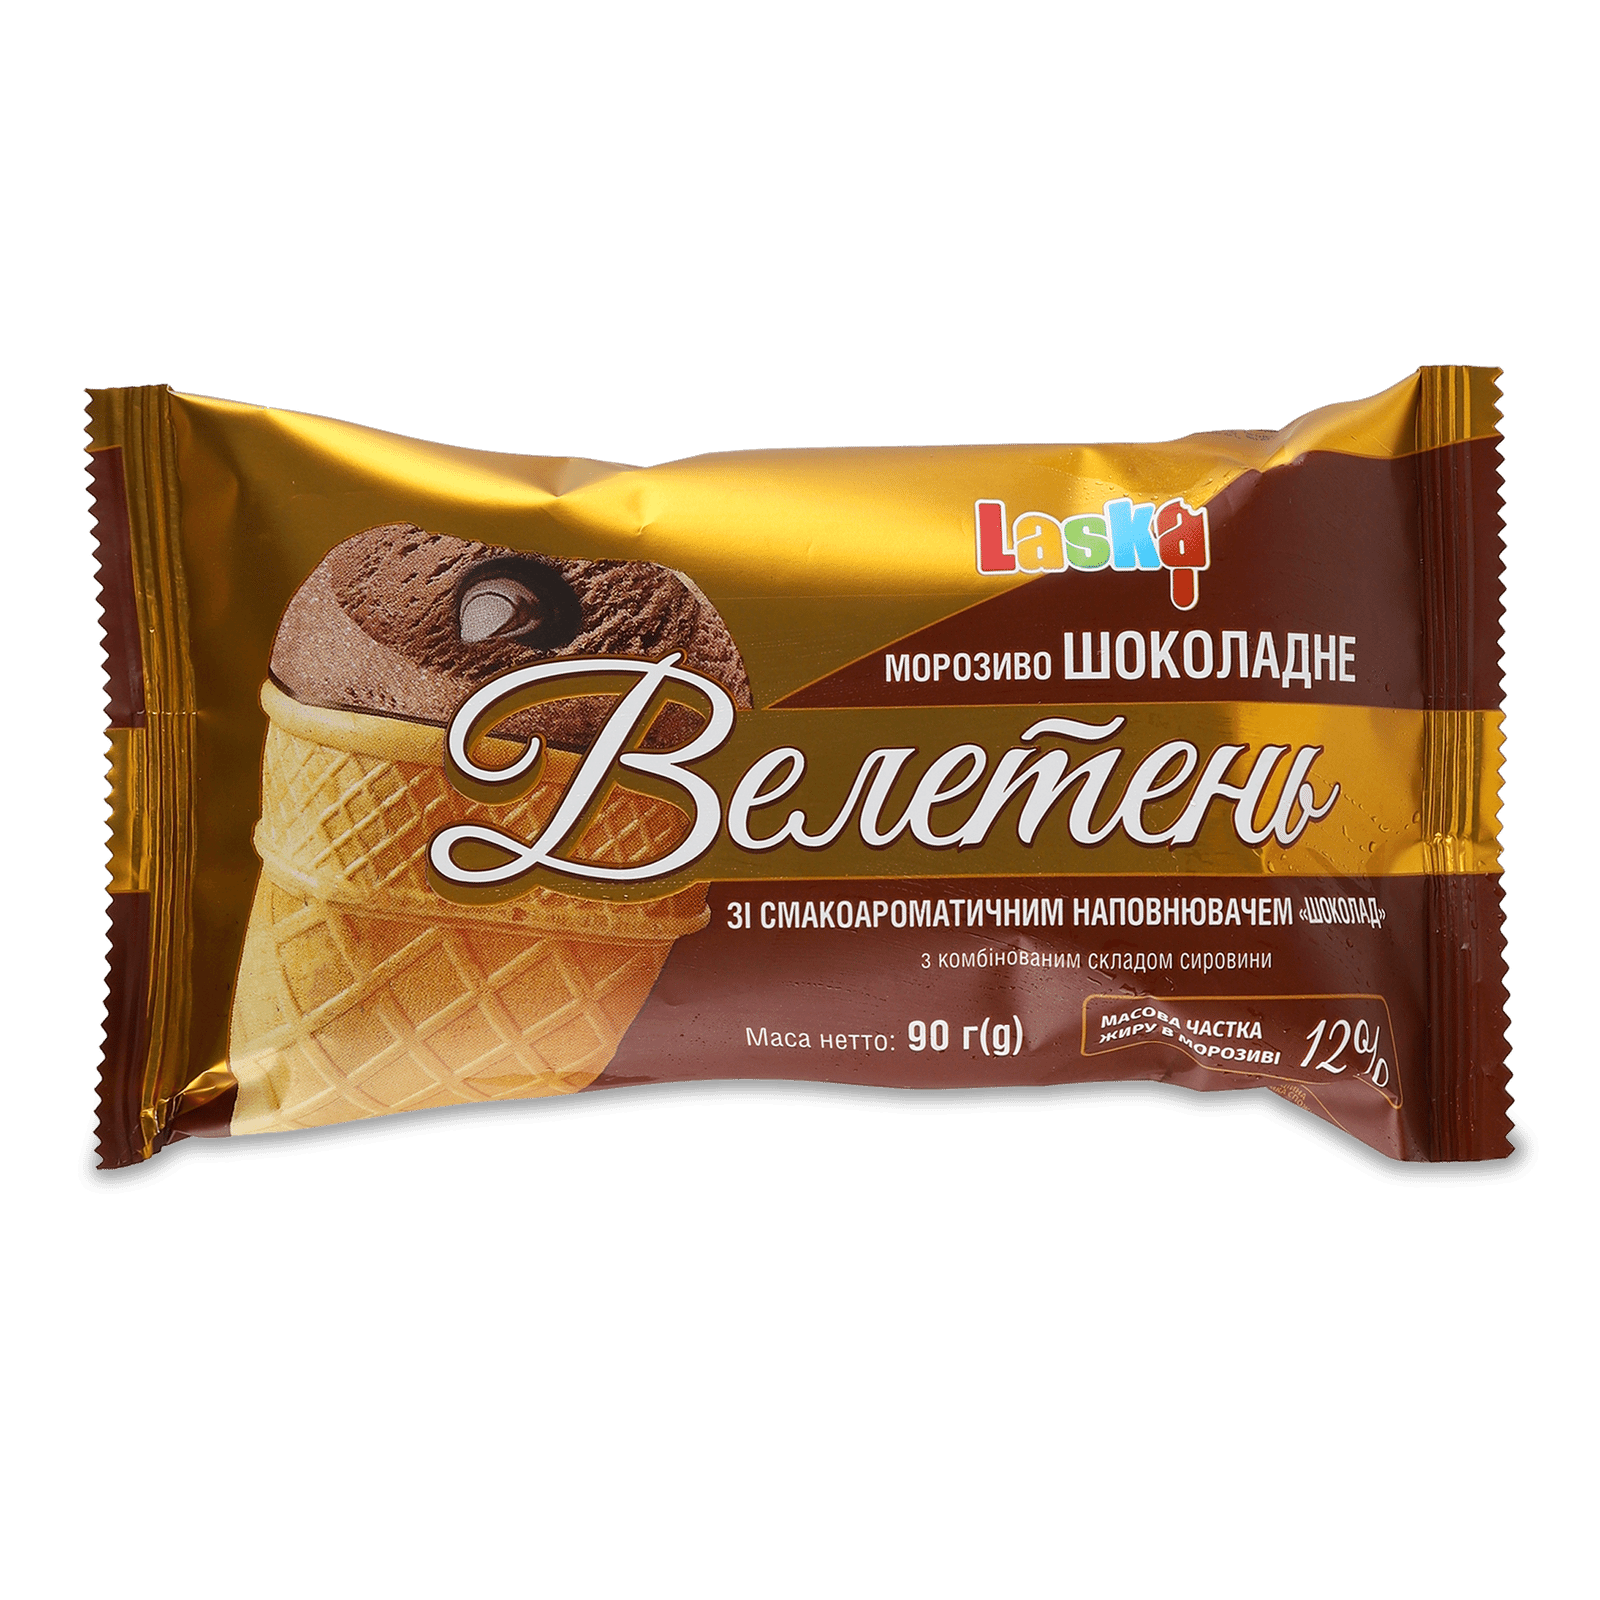 Морозиво Laska Велетень шоколадне 12% - 1